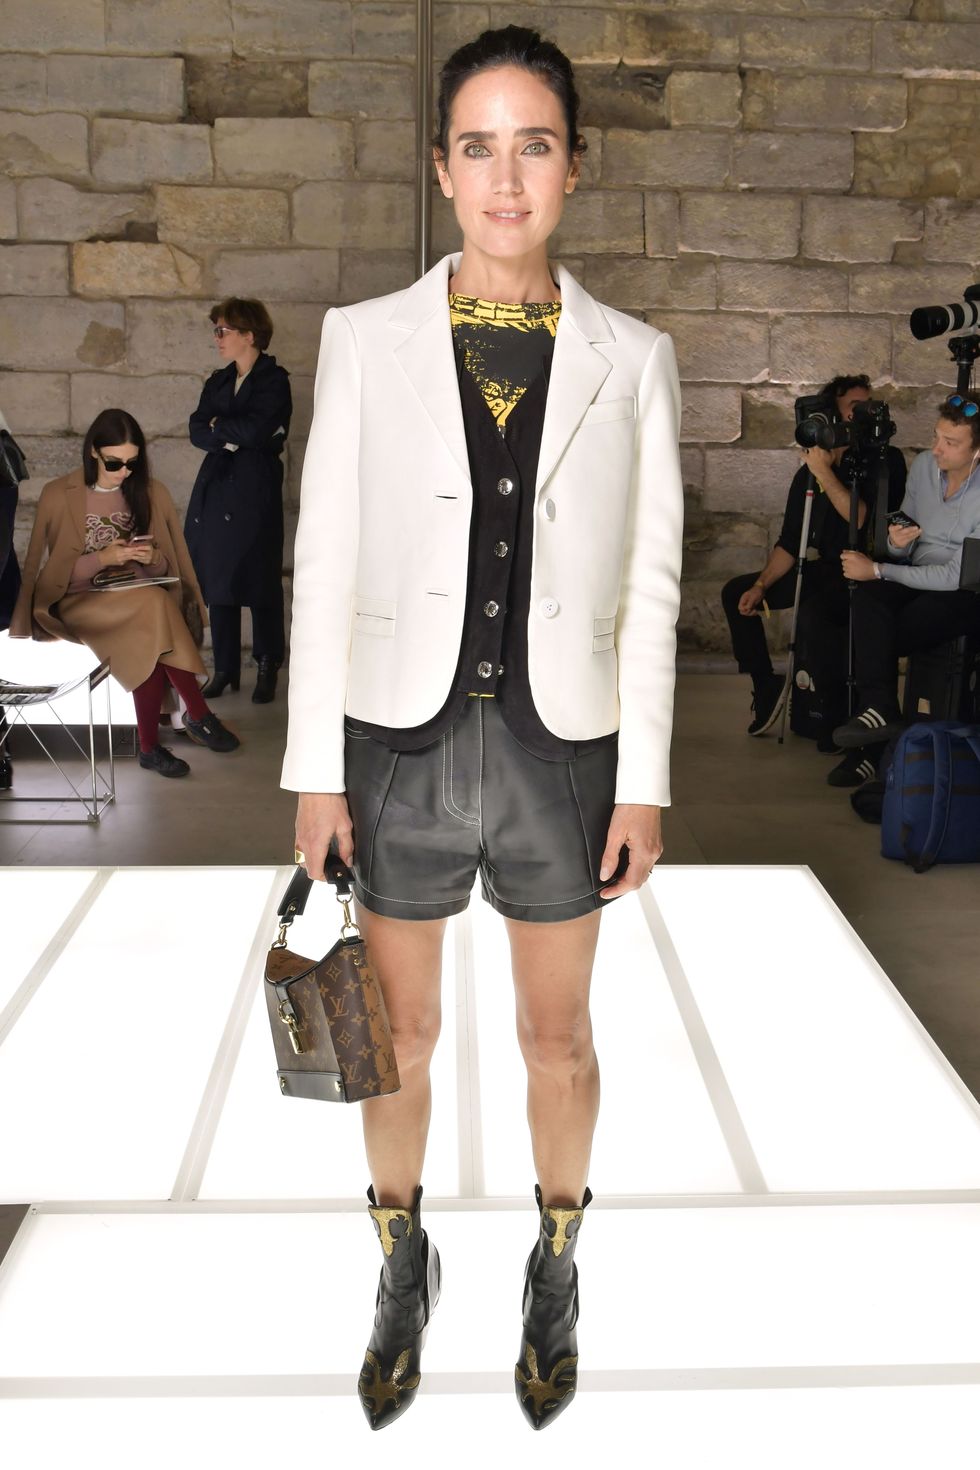 Gigi Hadid on Front Row at Louis Vuitton's PFW Men's Show